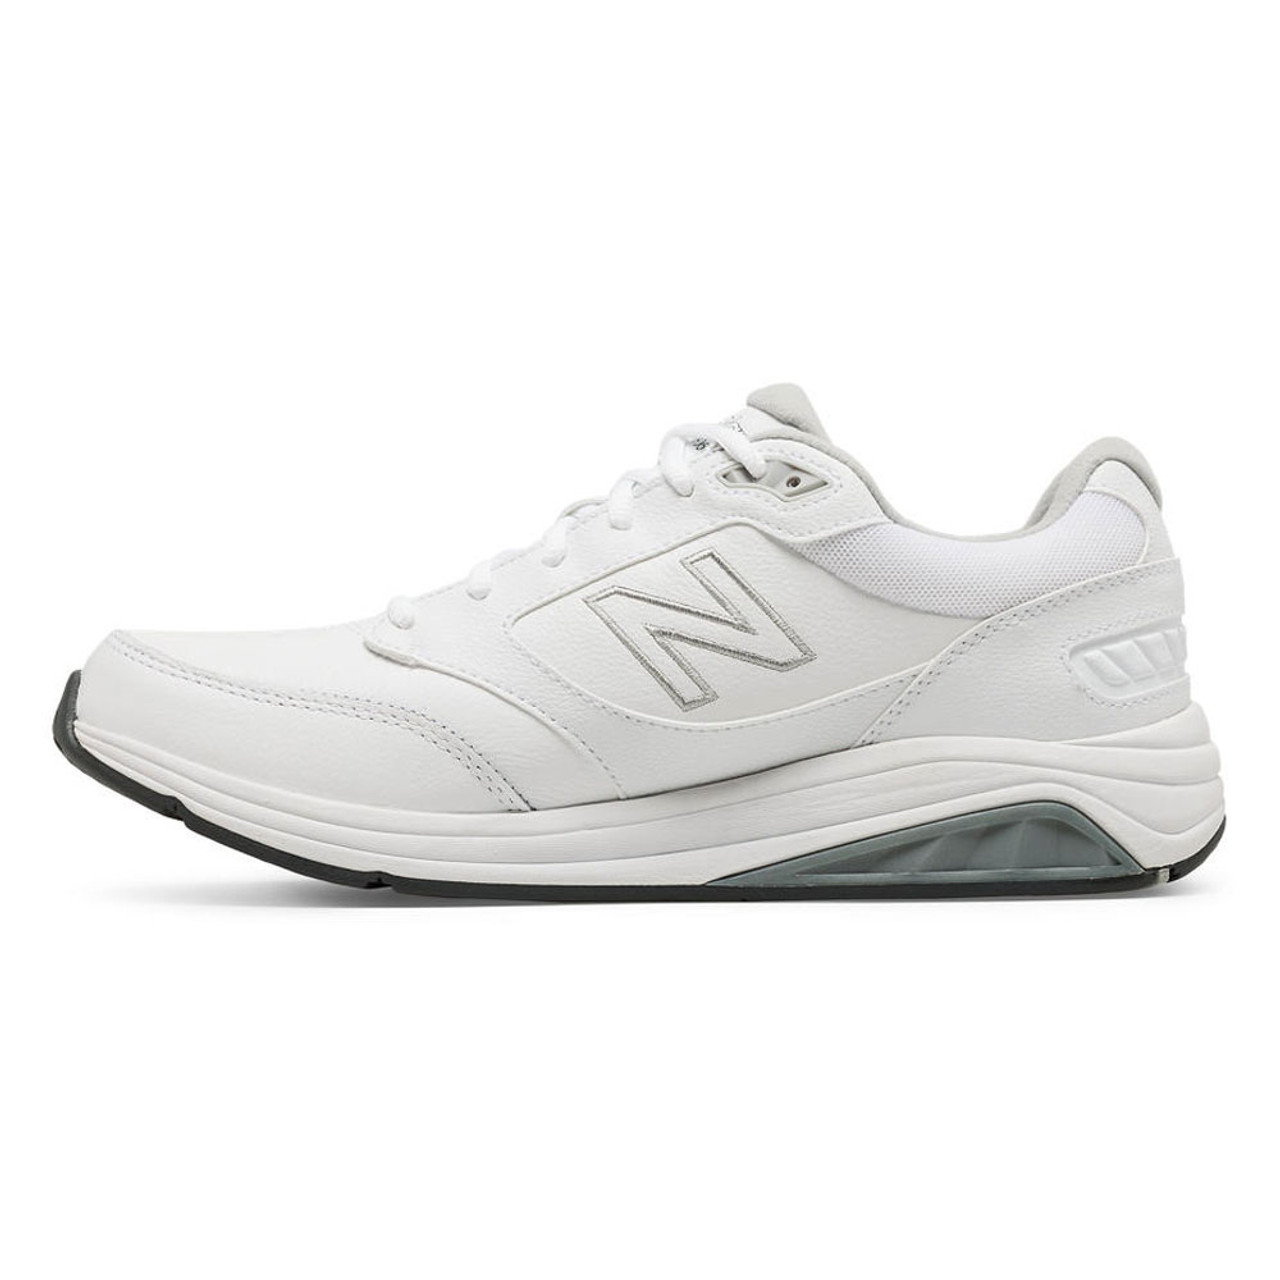 NB 928v3 Men's Walking - White - ShoeStores.com